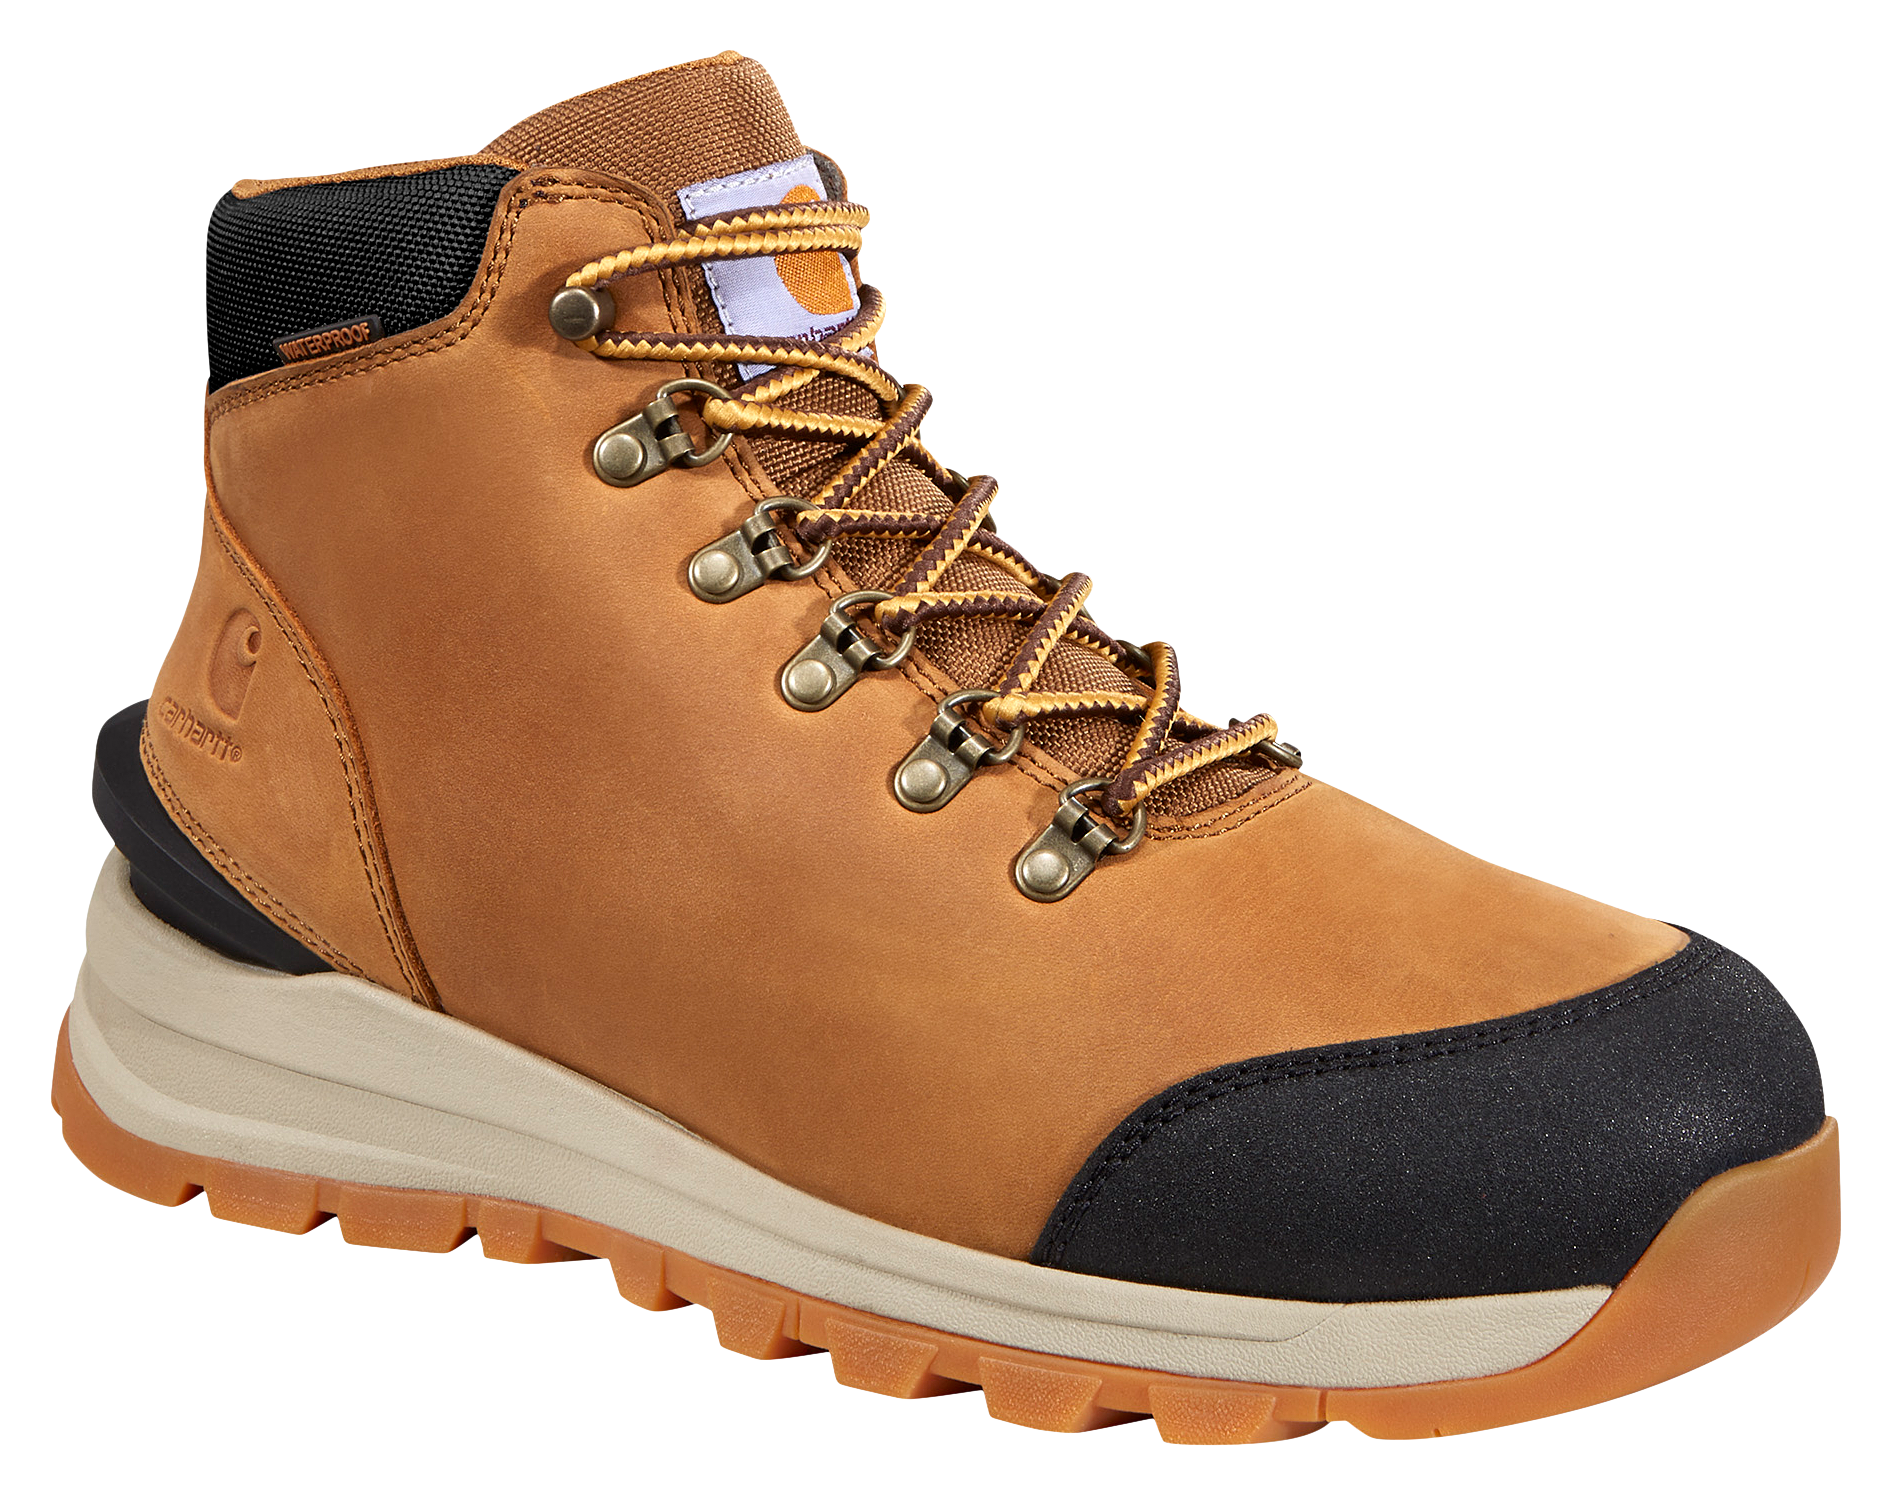 Carhartt Gilmore Waterproof Hiking Boots for Men - Brown - 8.5W